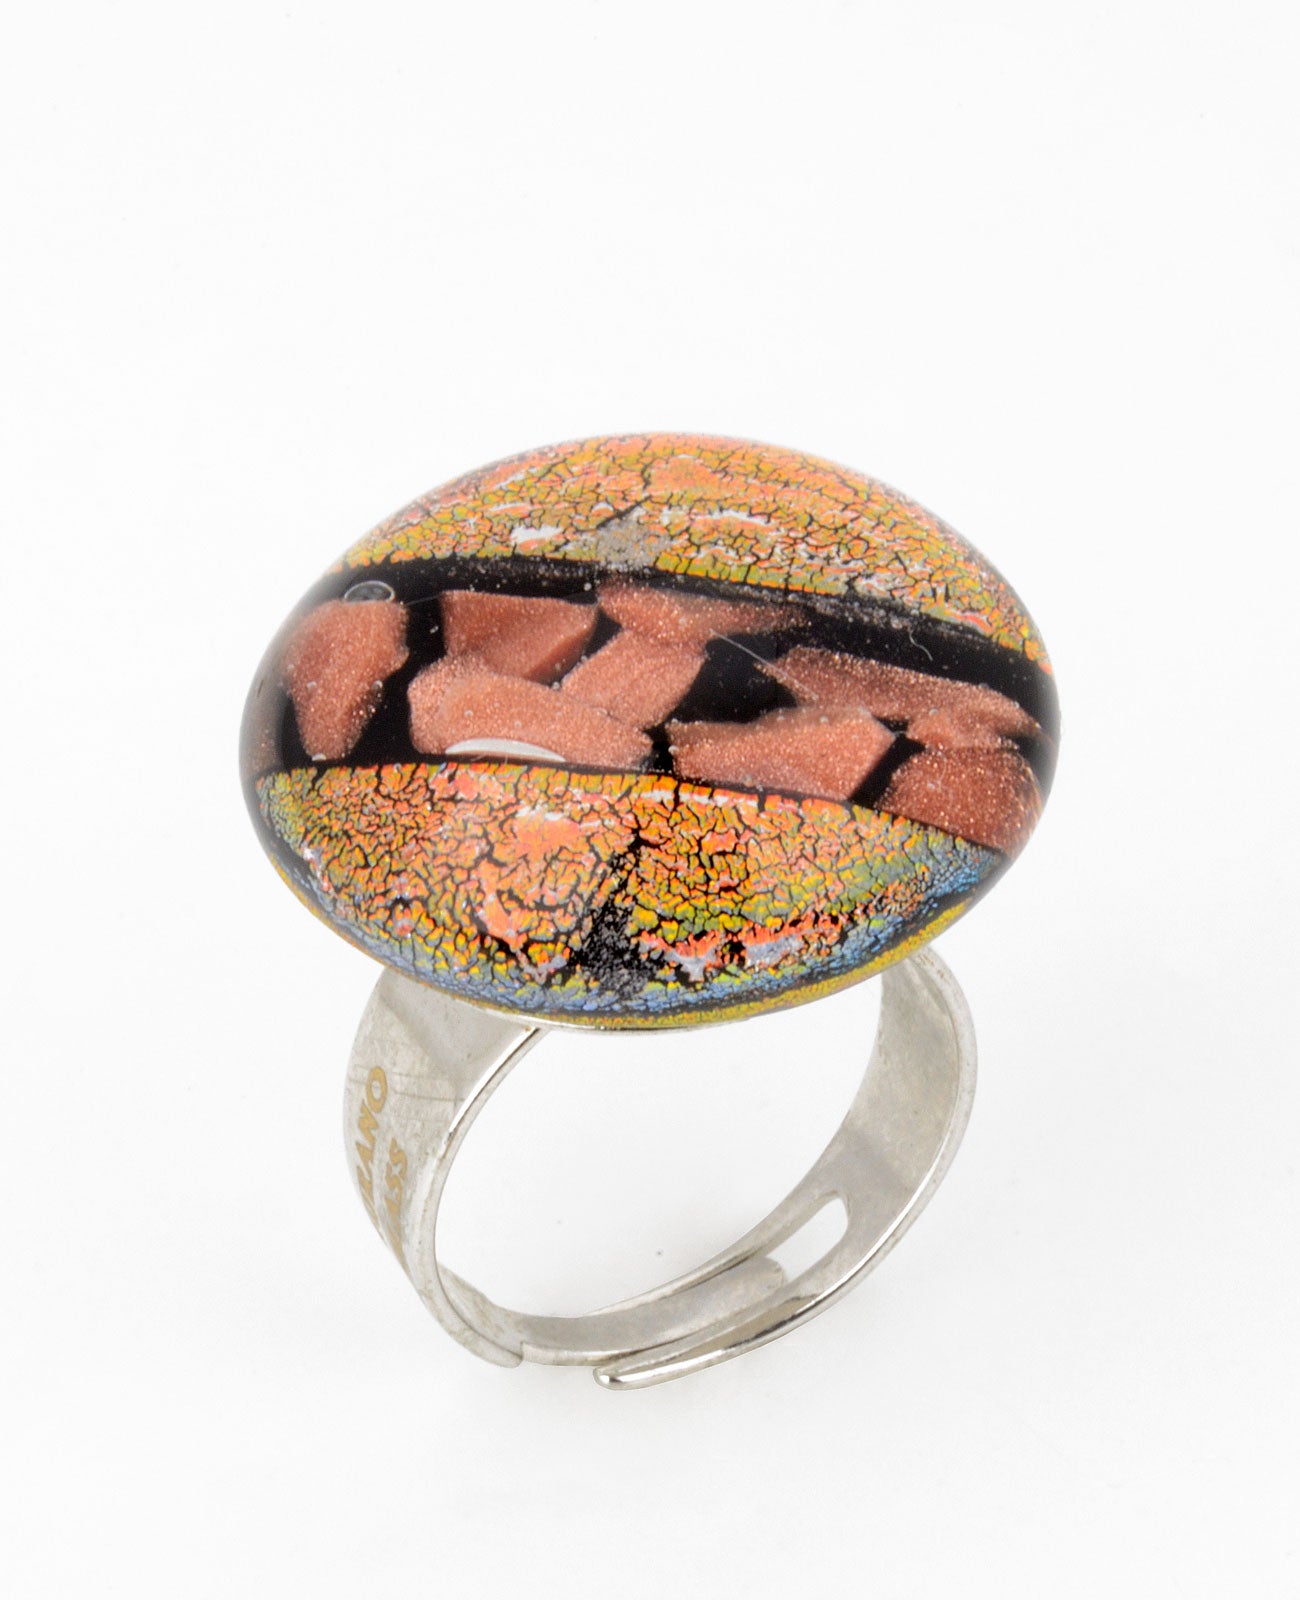 Planet Ring in Murano Glass - Vetri D'Arte